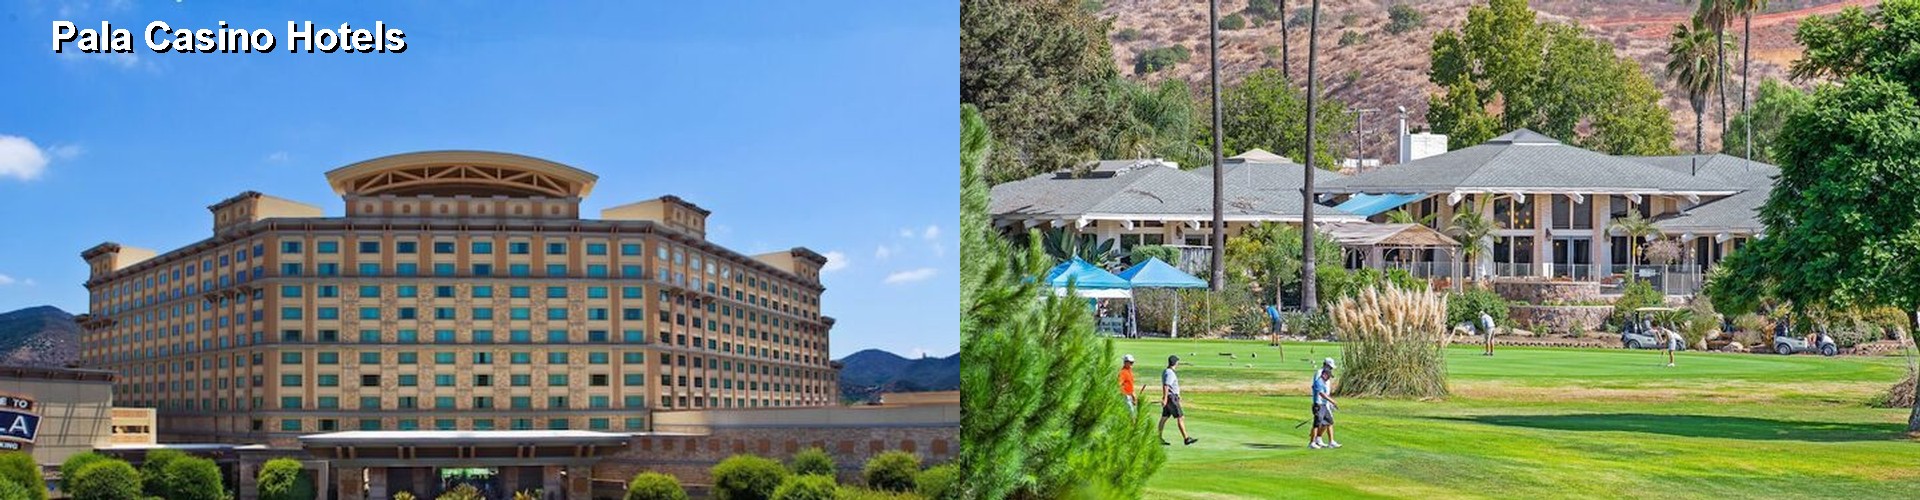 5 Best Hotels near Pala Casino